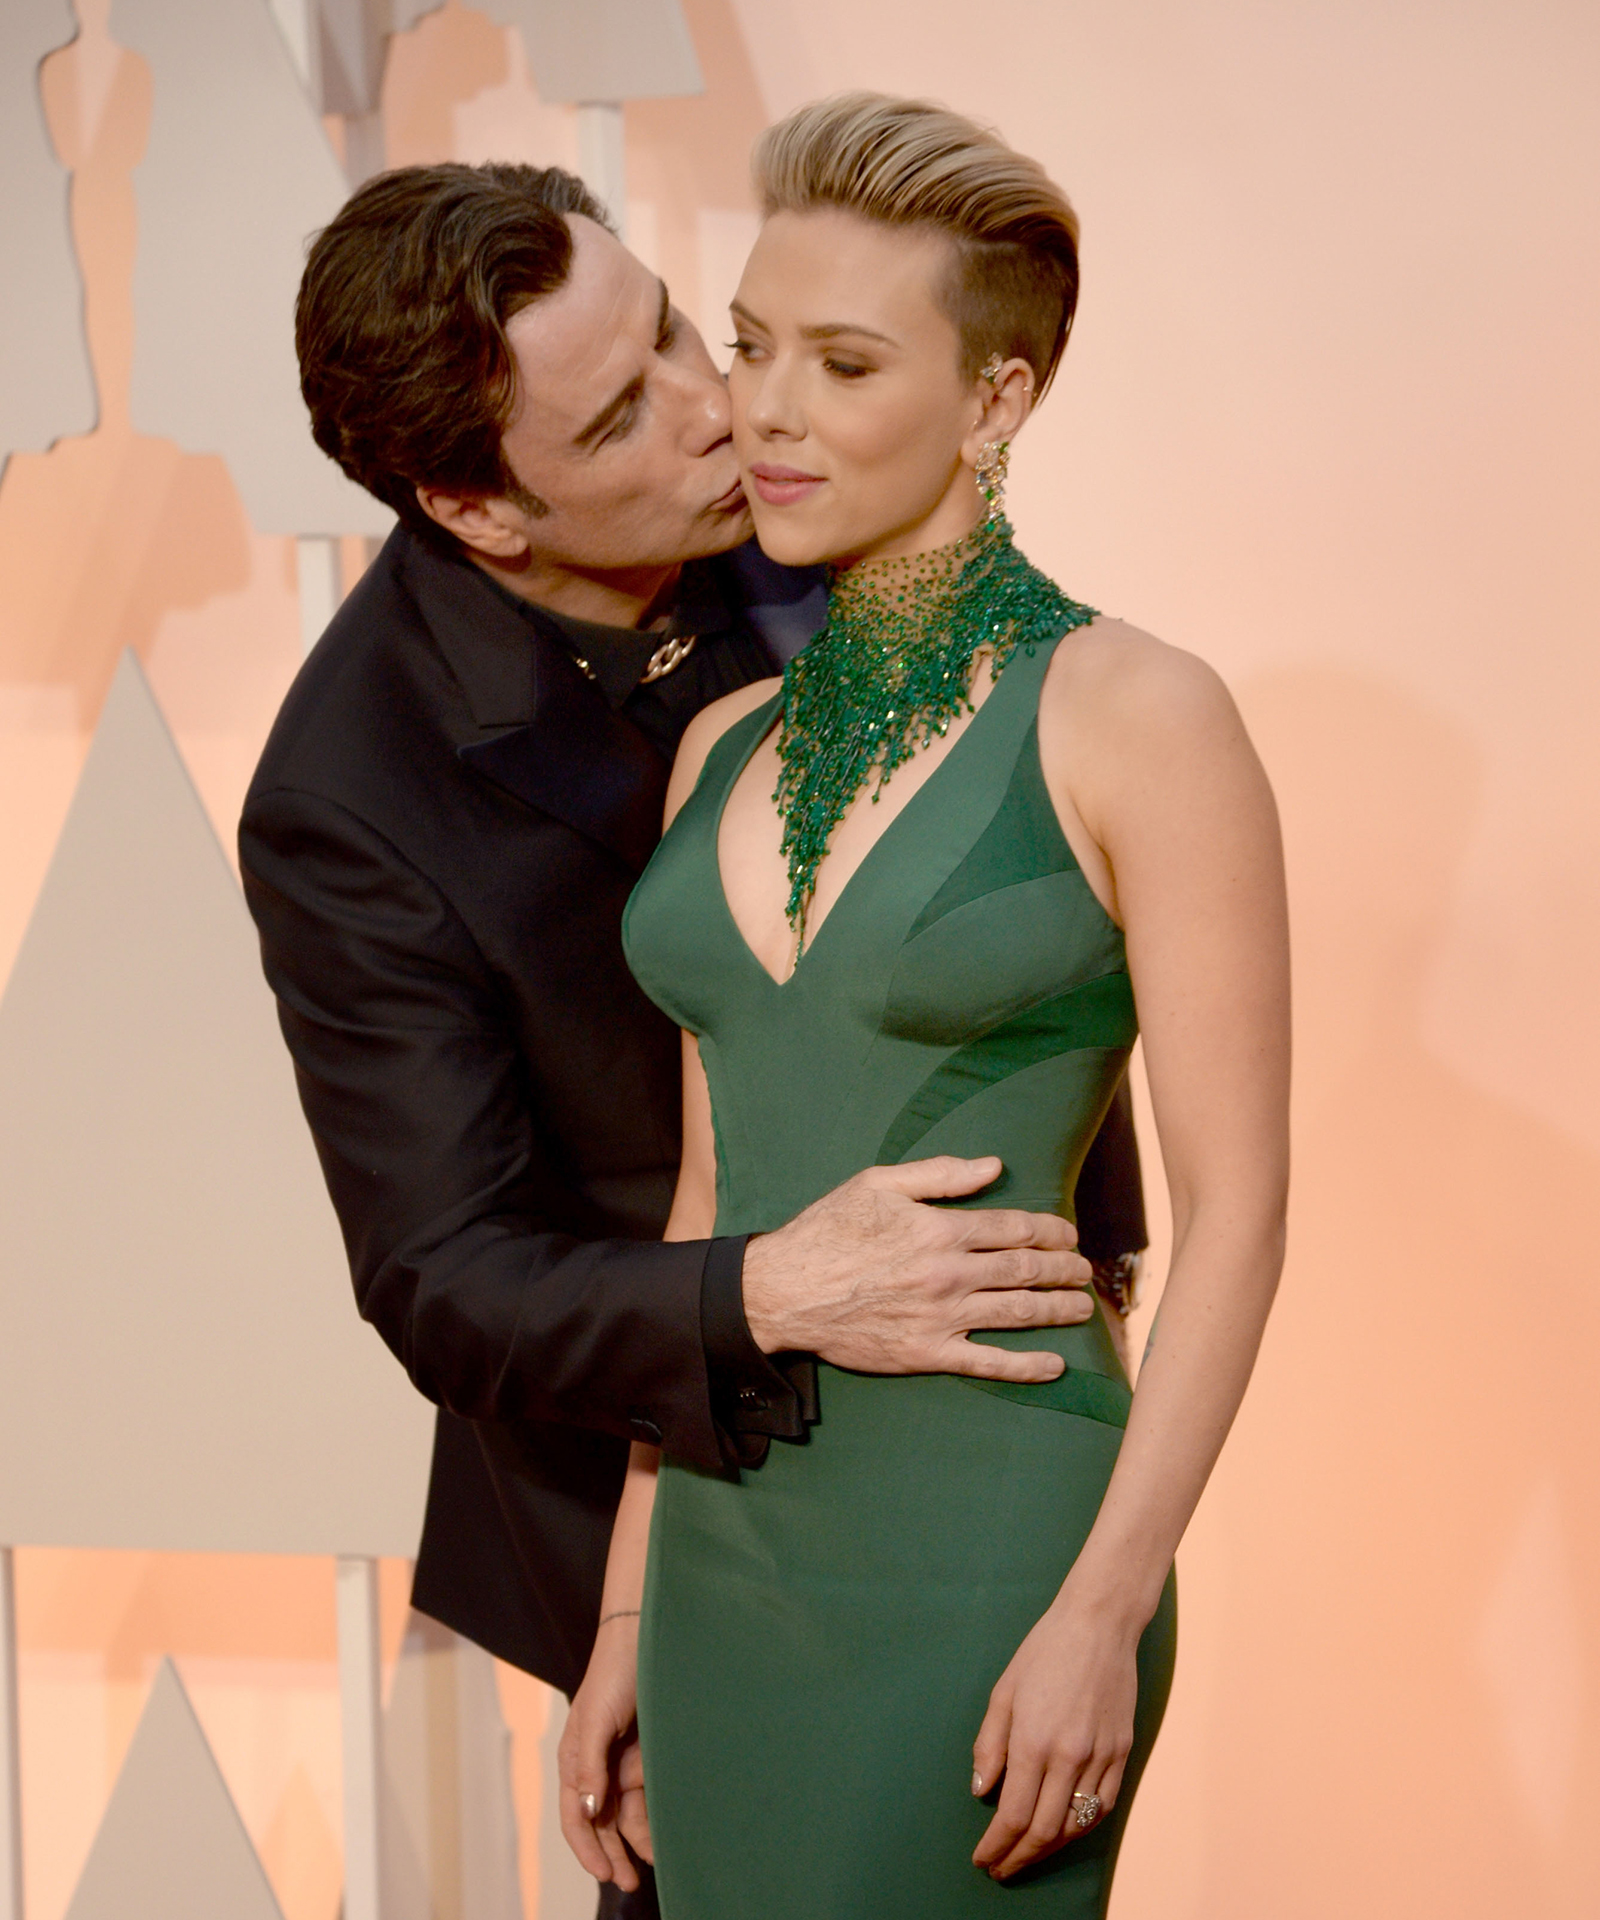 John Travolta's awkward kiss with Scarlett Johansson 